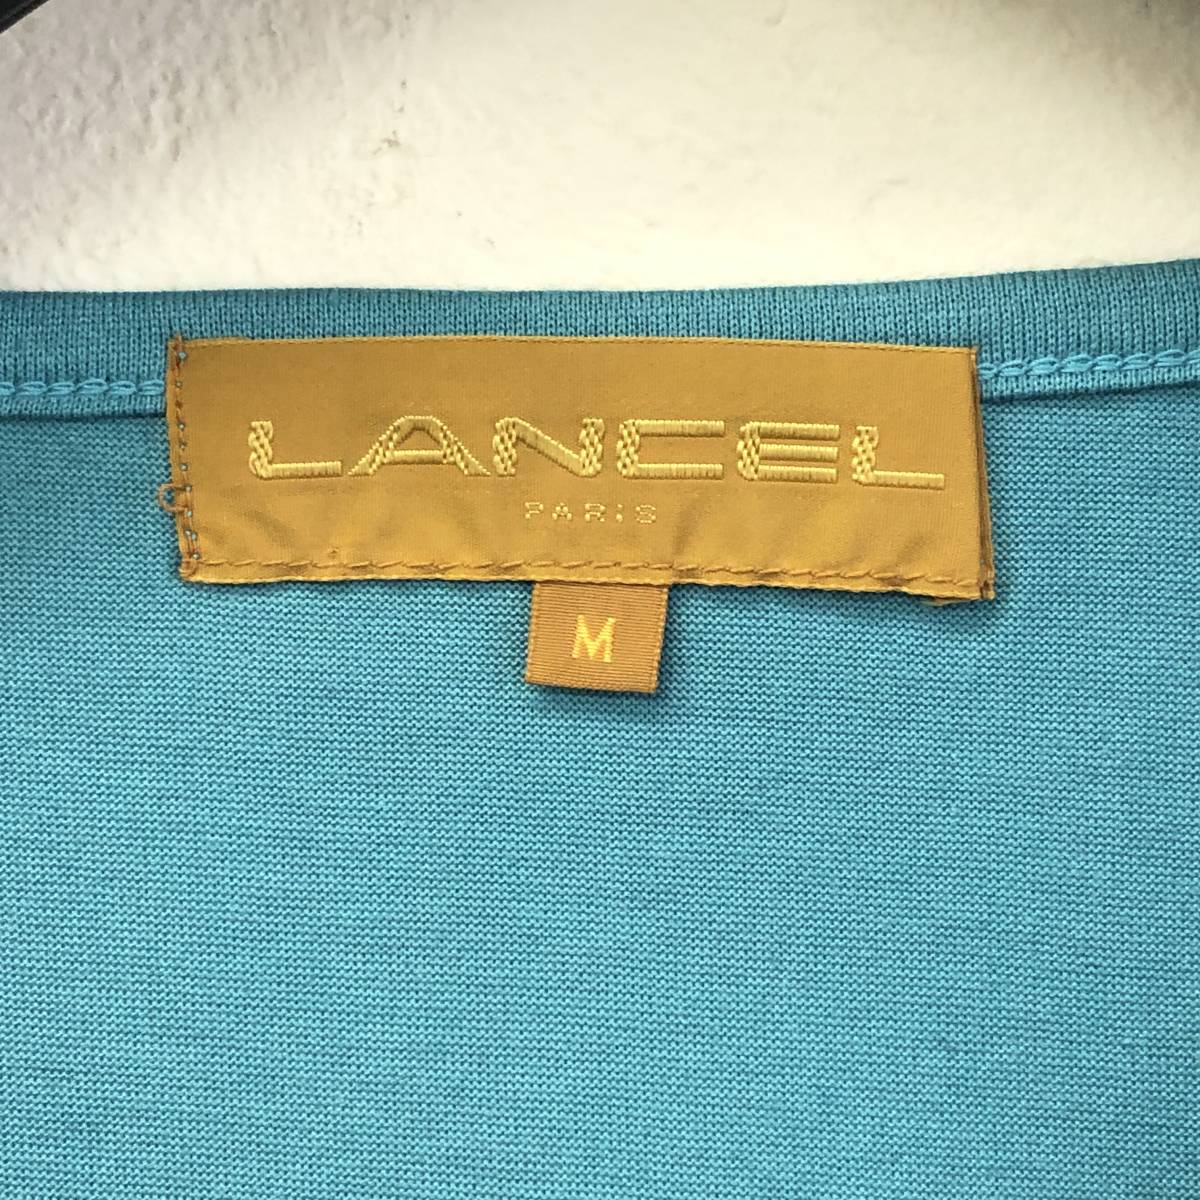 [ Western-style clothes ] LANCEL: Lancel short sleeves T-shirt blue green color size :M perhaps men's unused 